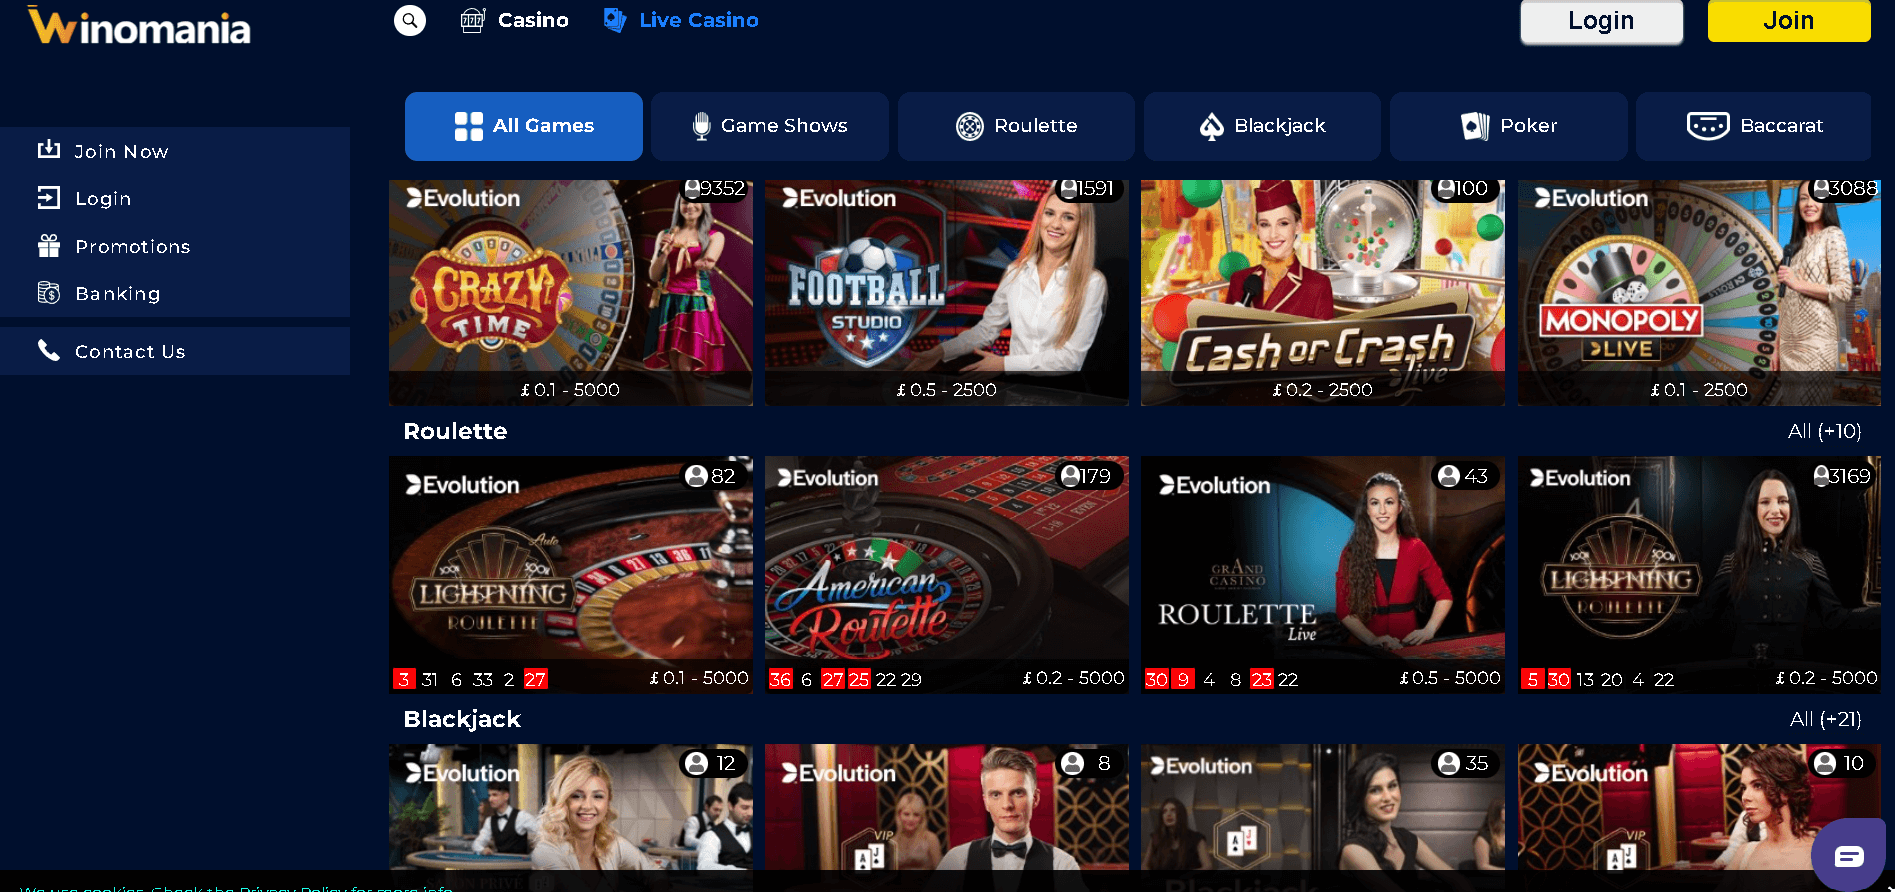 Winomania live casino games and review